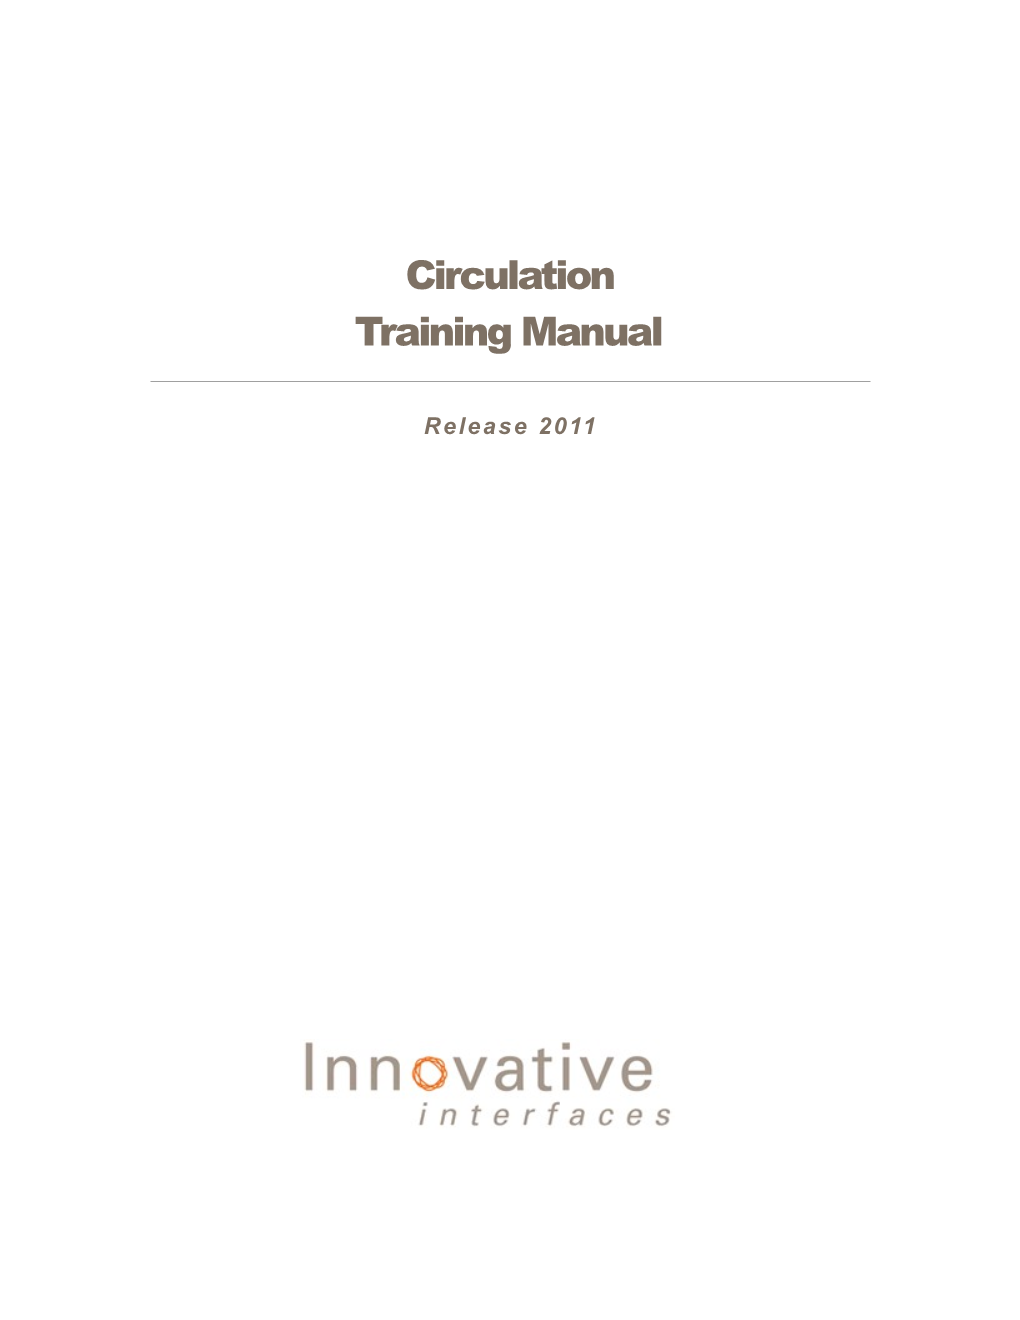 Circulation Training Manual Release 2011